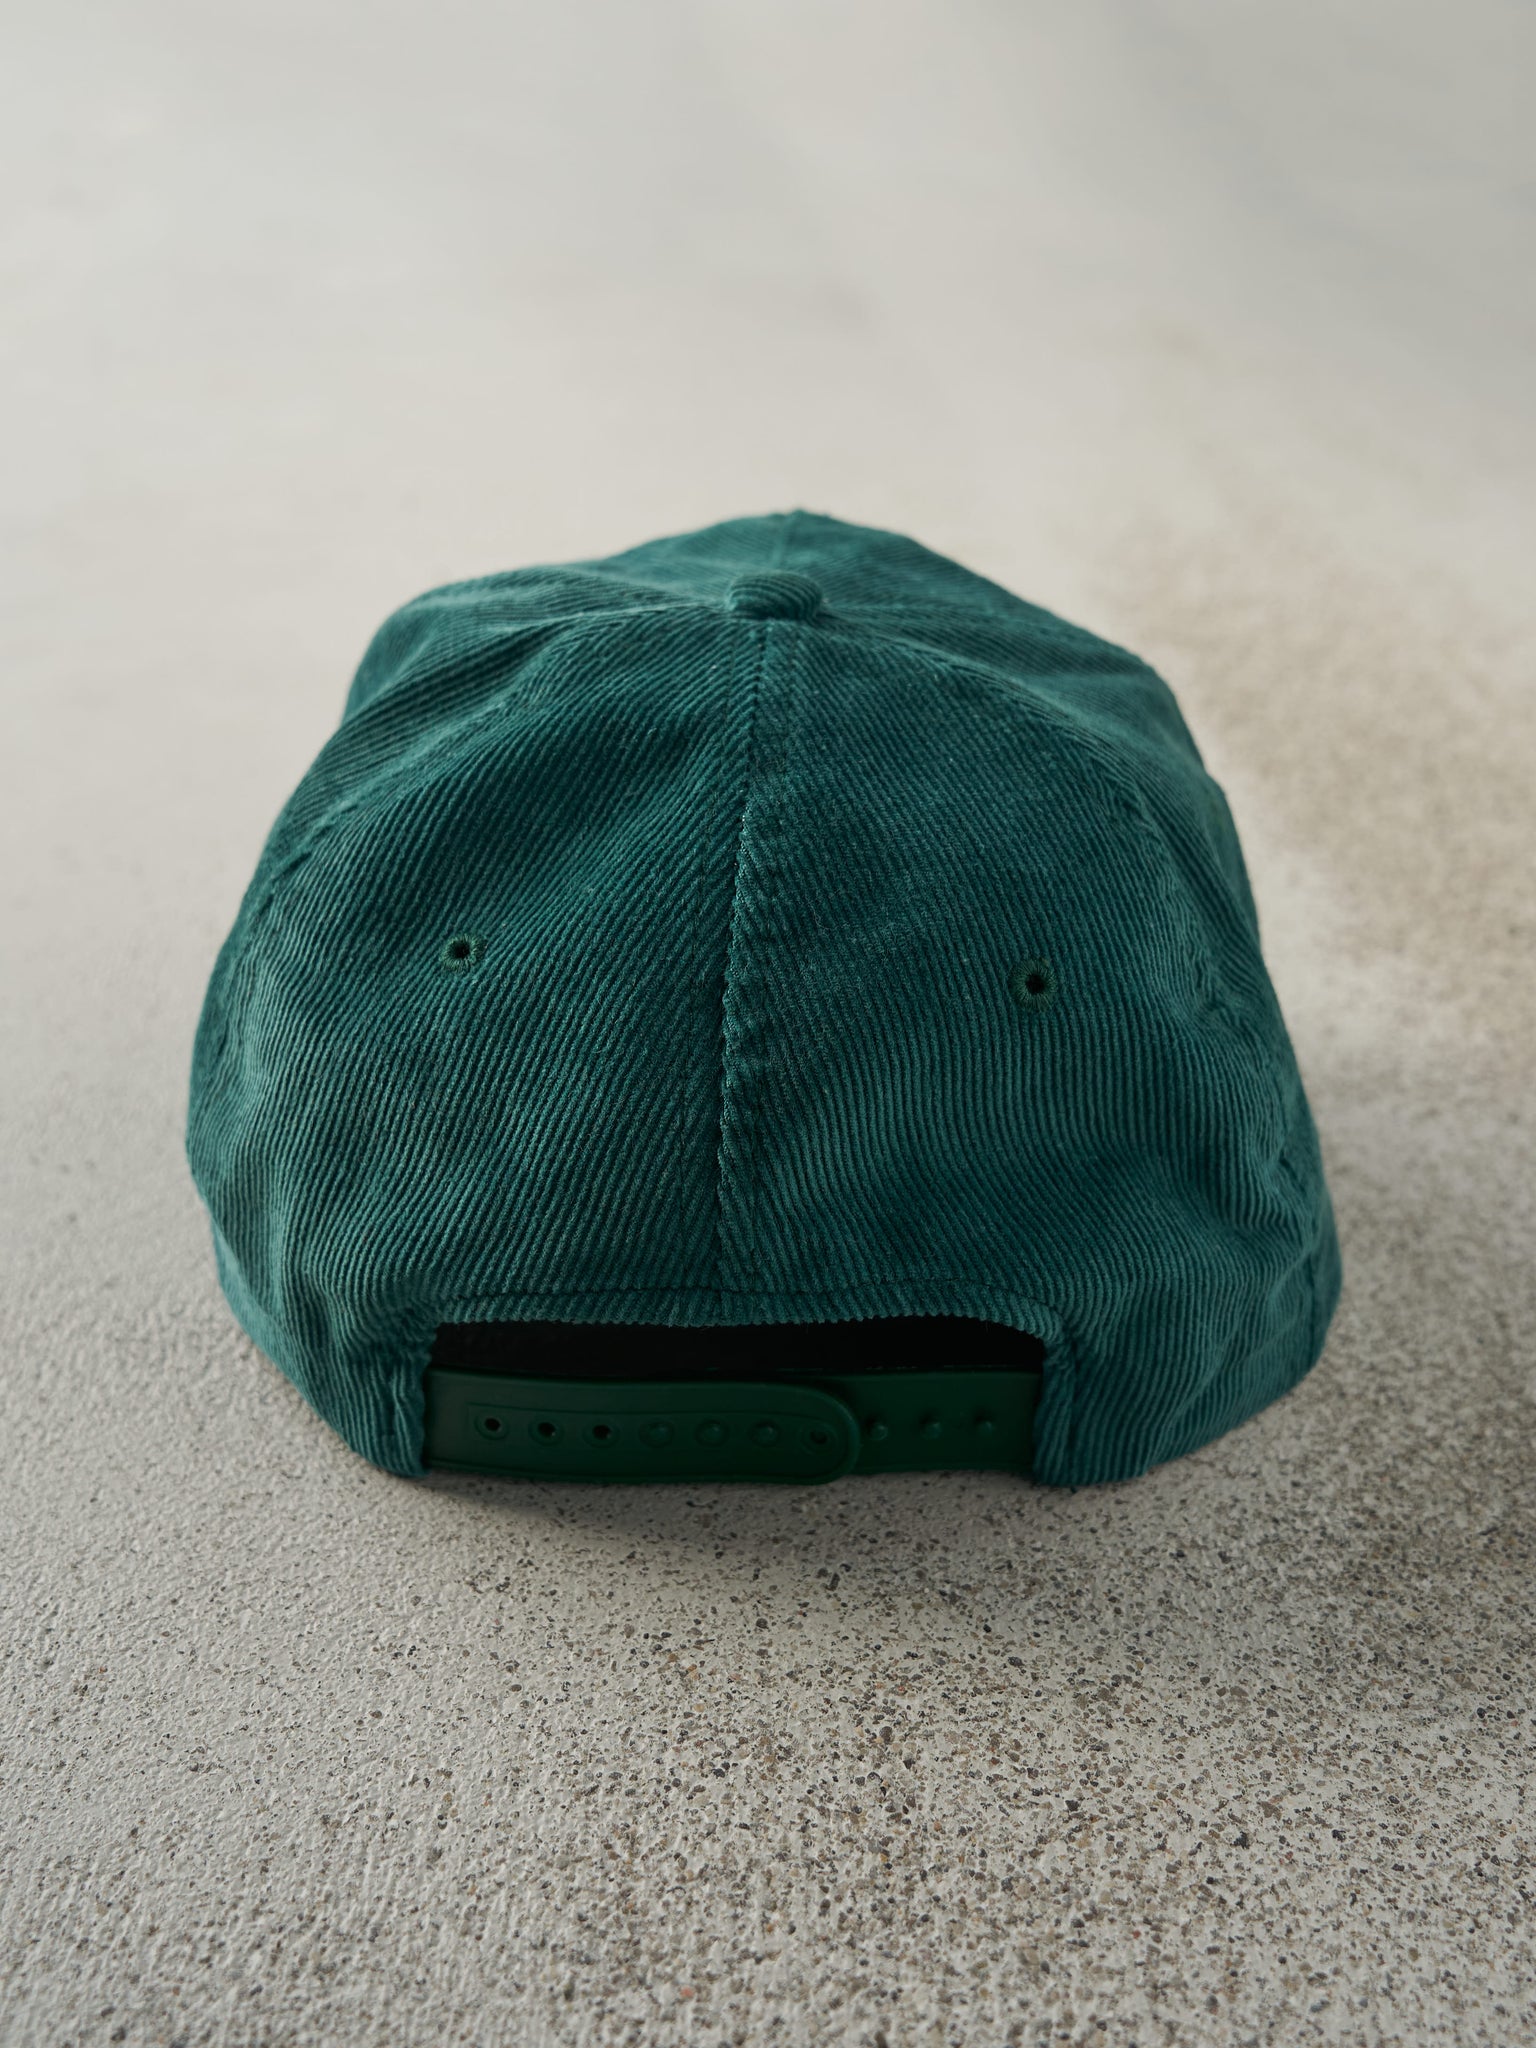 Vintage 80s Green Embroidered Osgoode Corduroy Snapback Hat